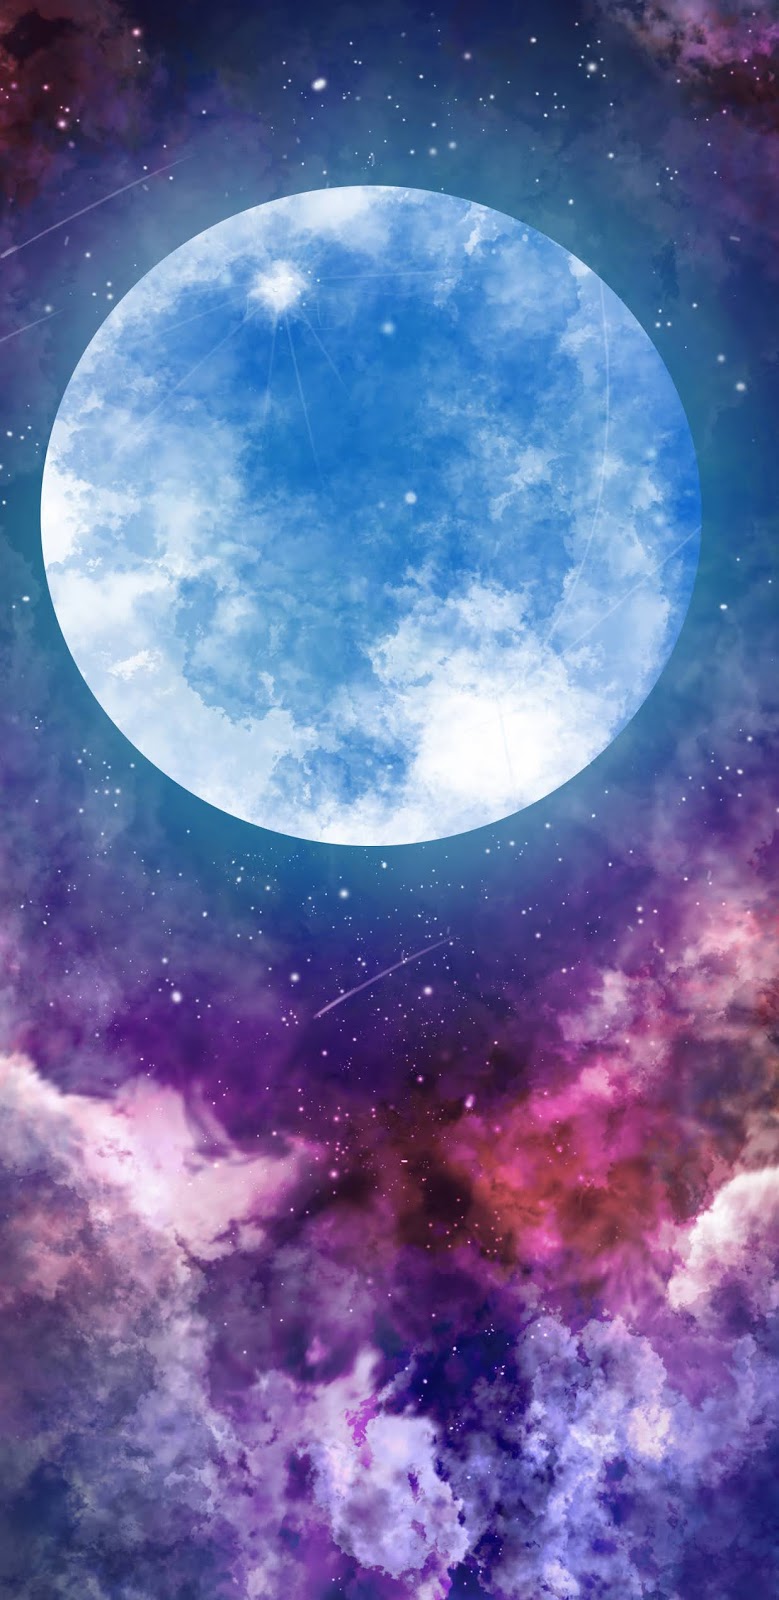 The blue full moon